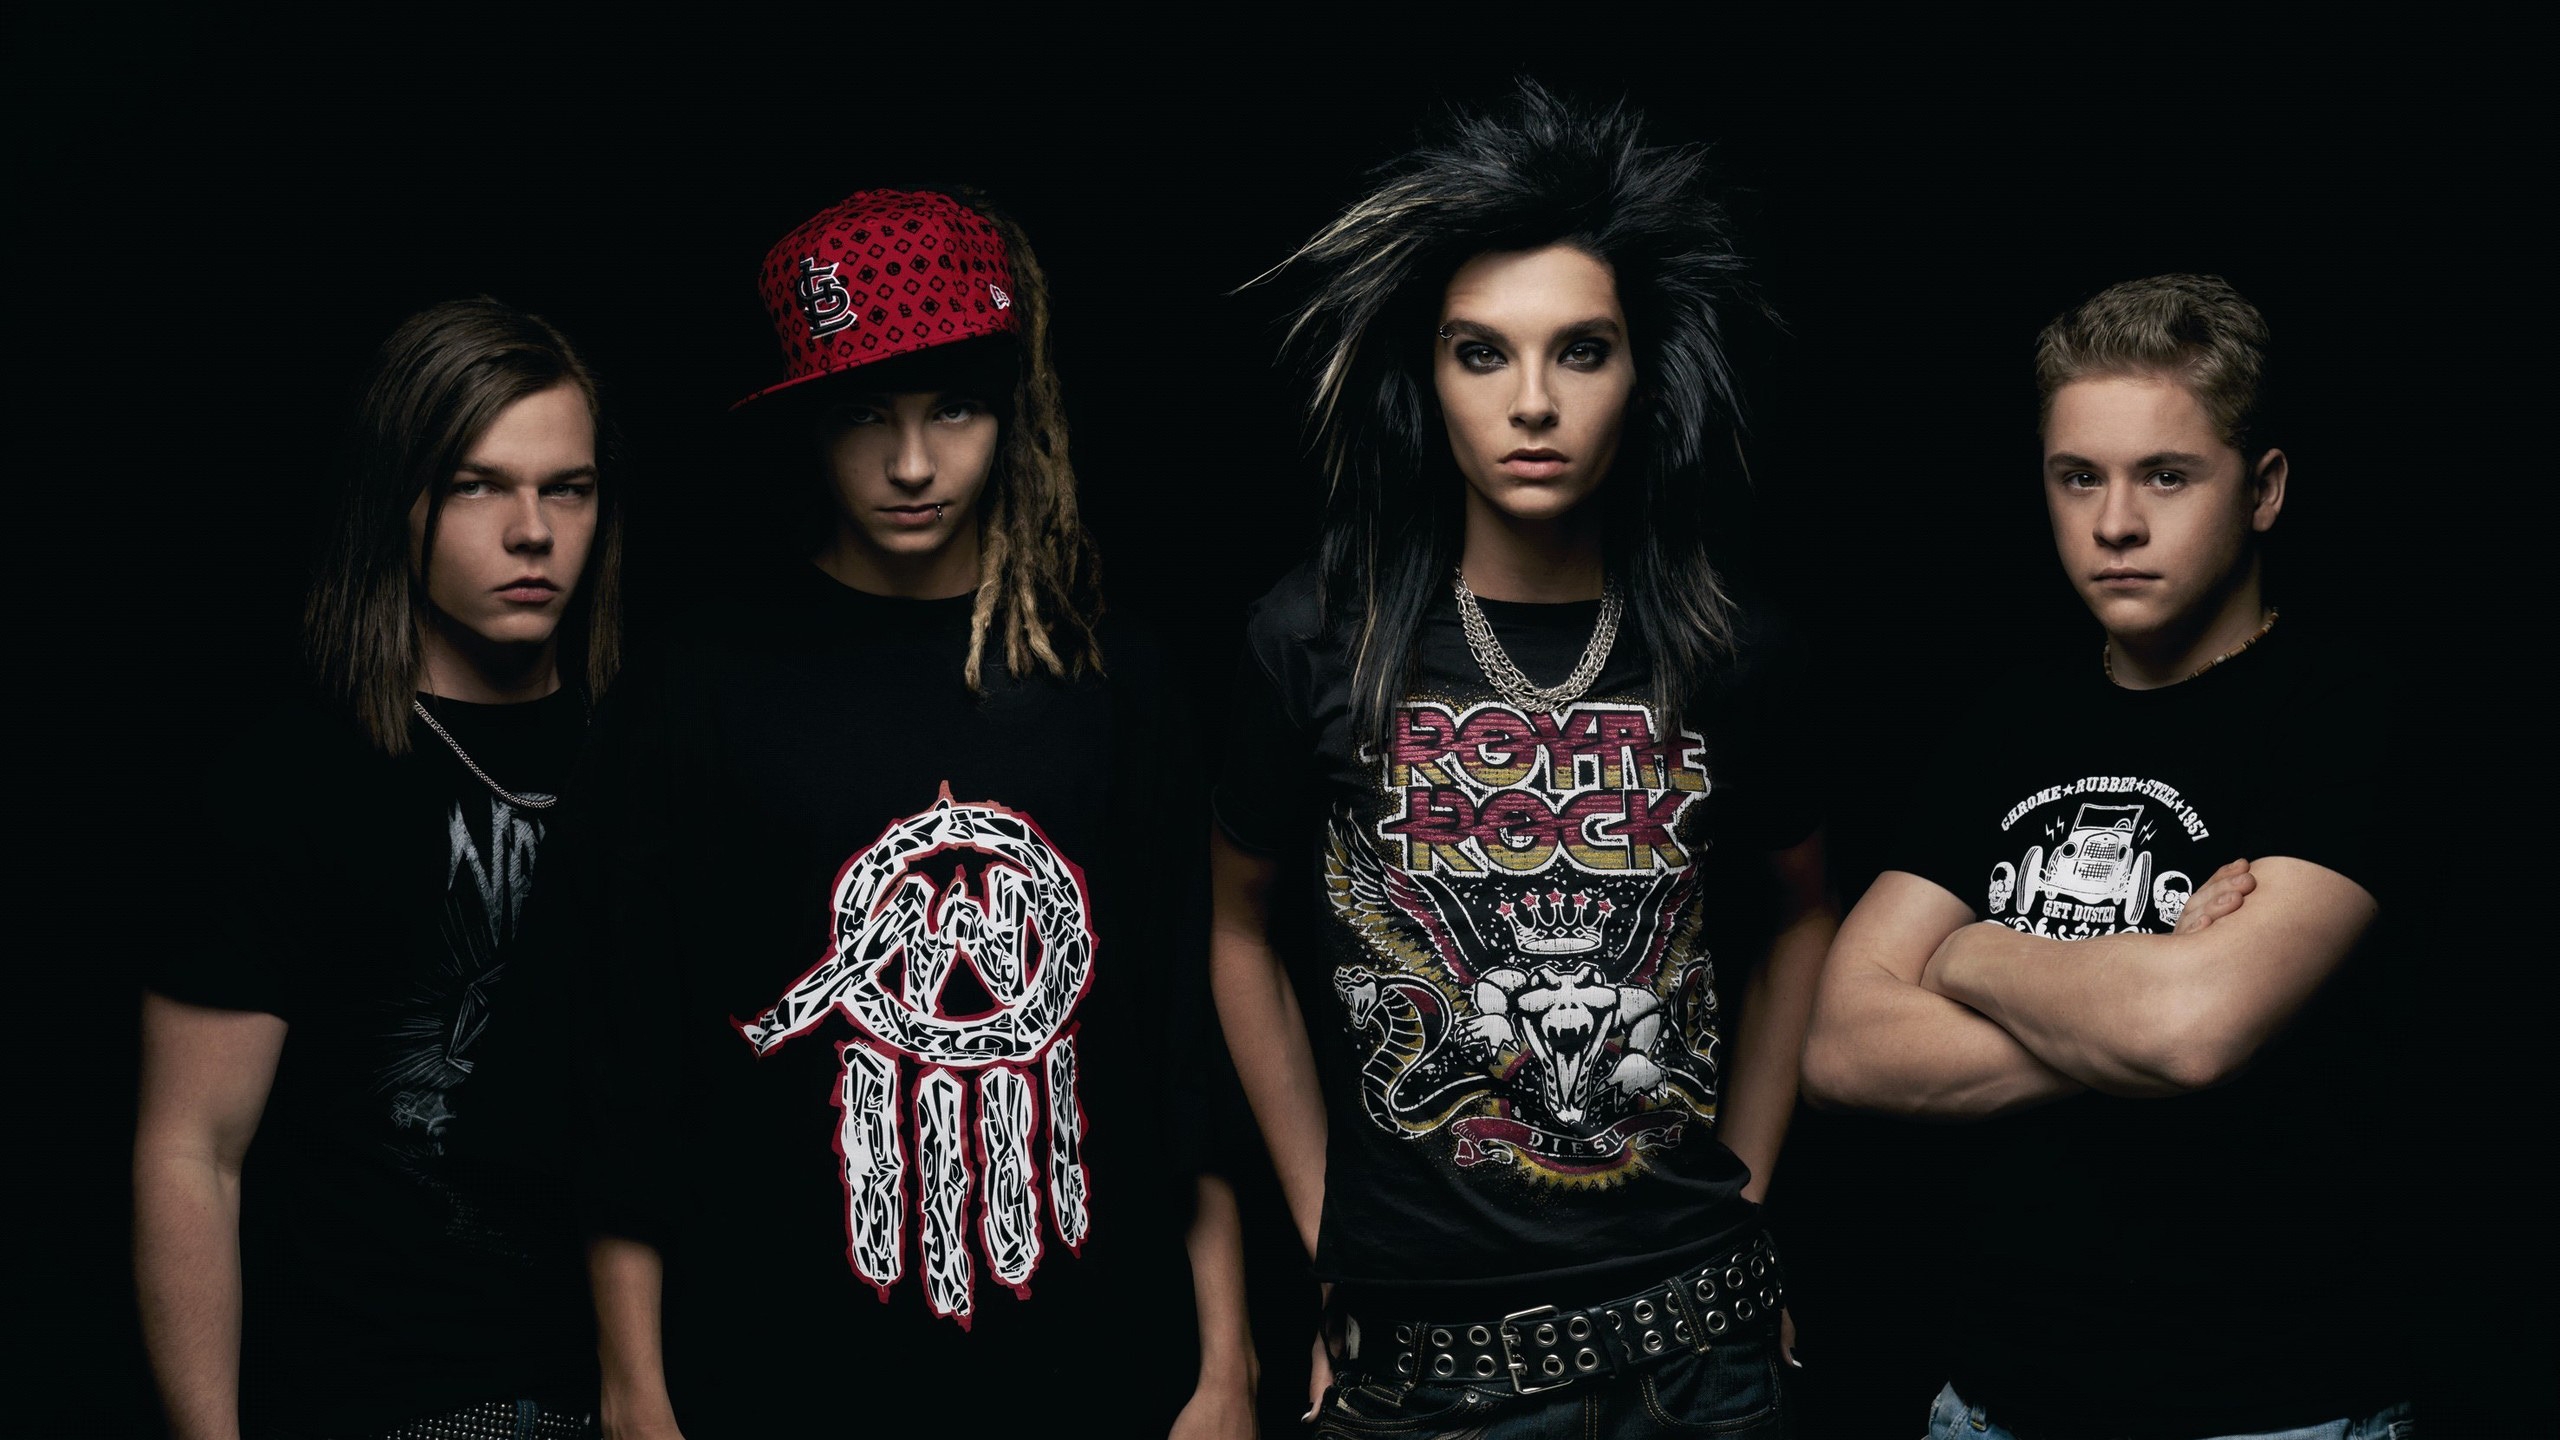 Tokio Hotel Band for 2560x1440 HDTV resolution